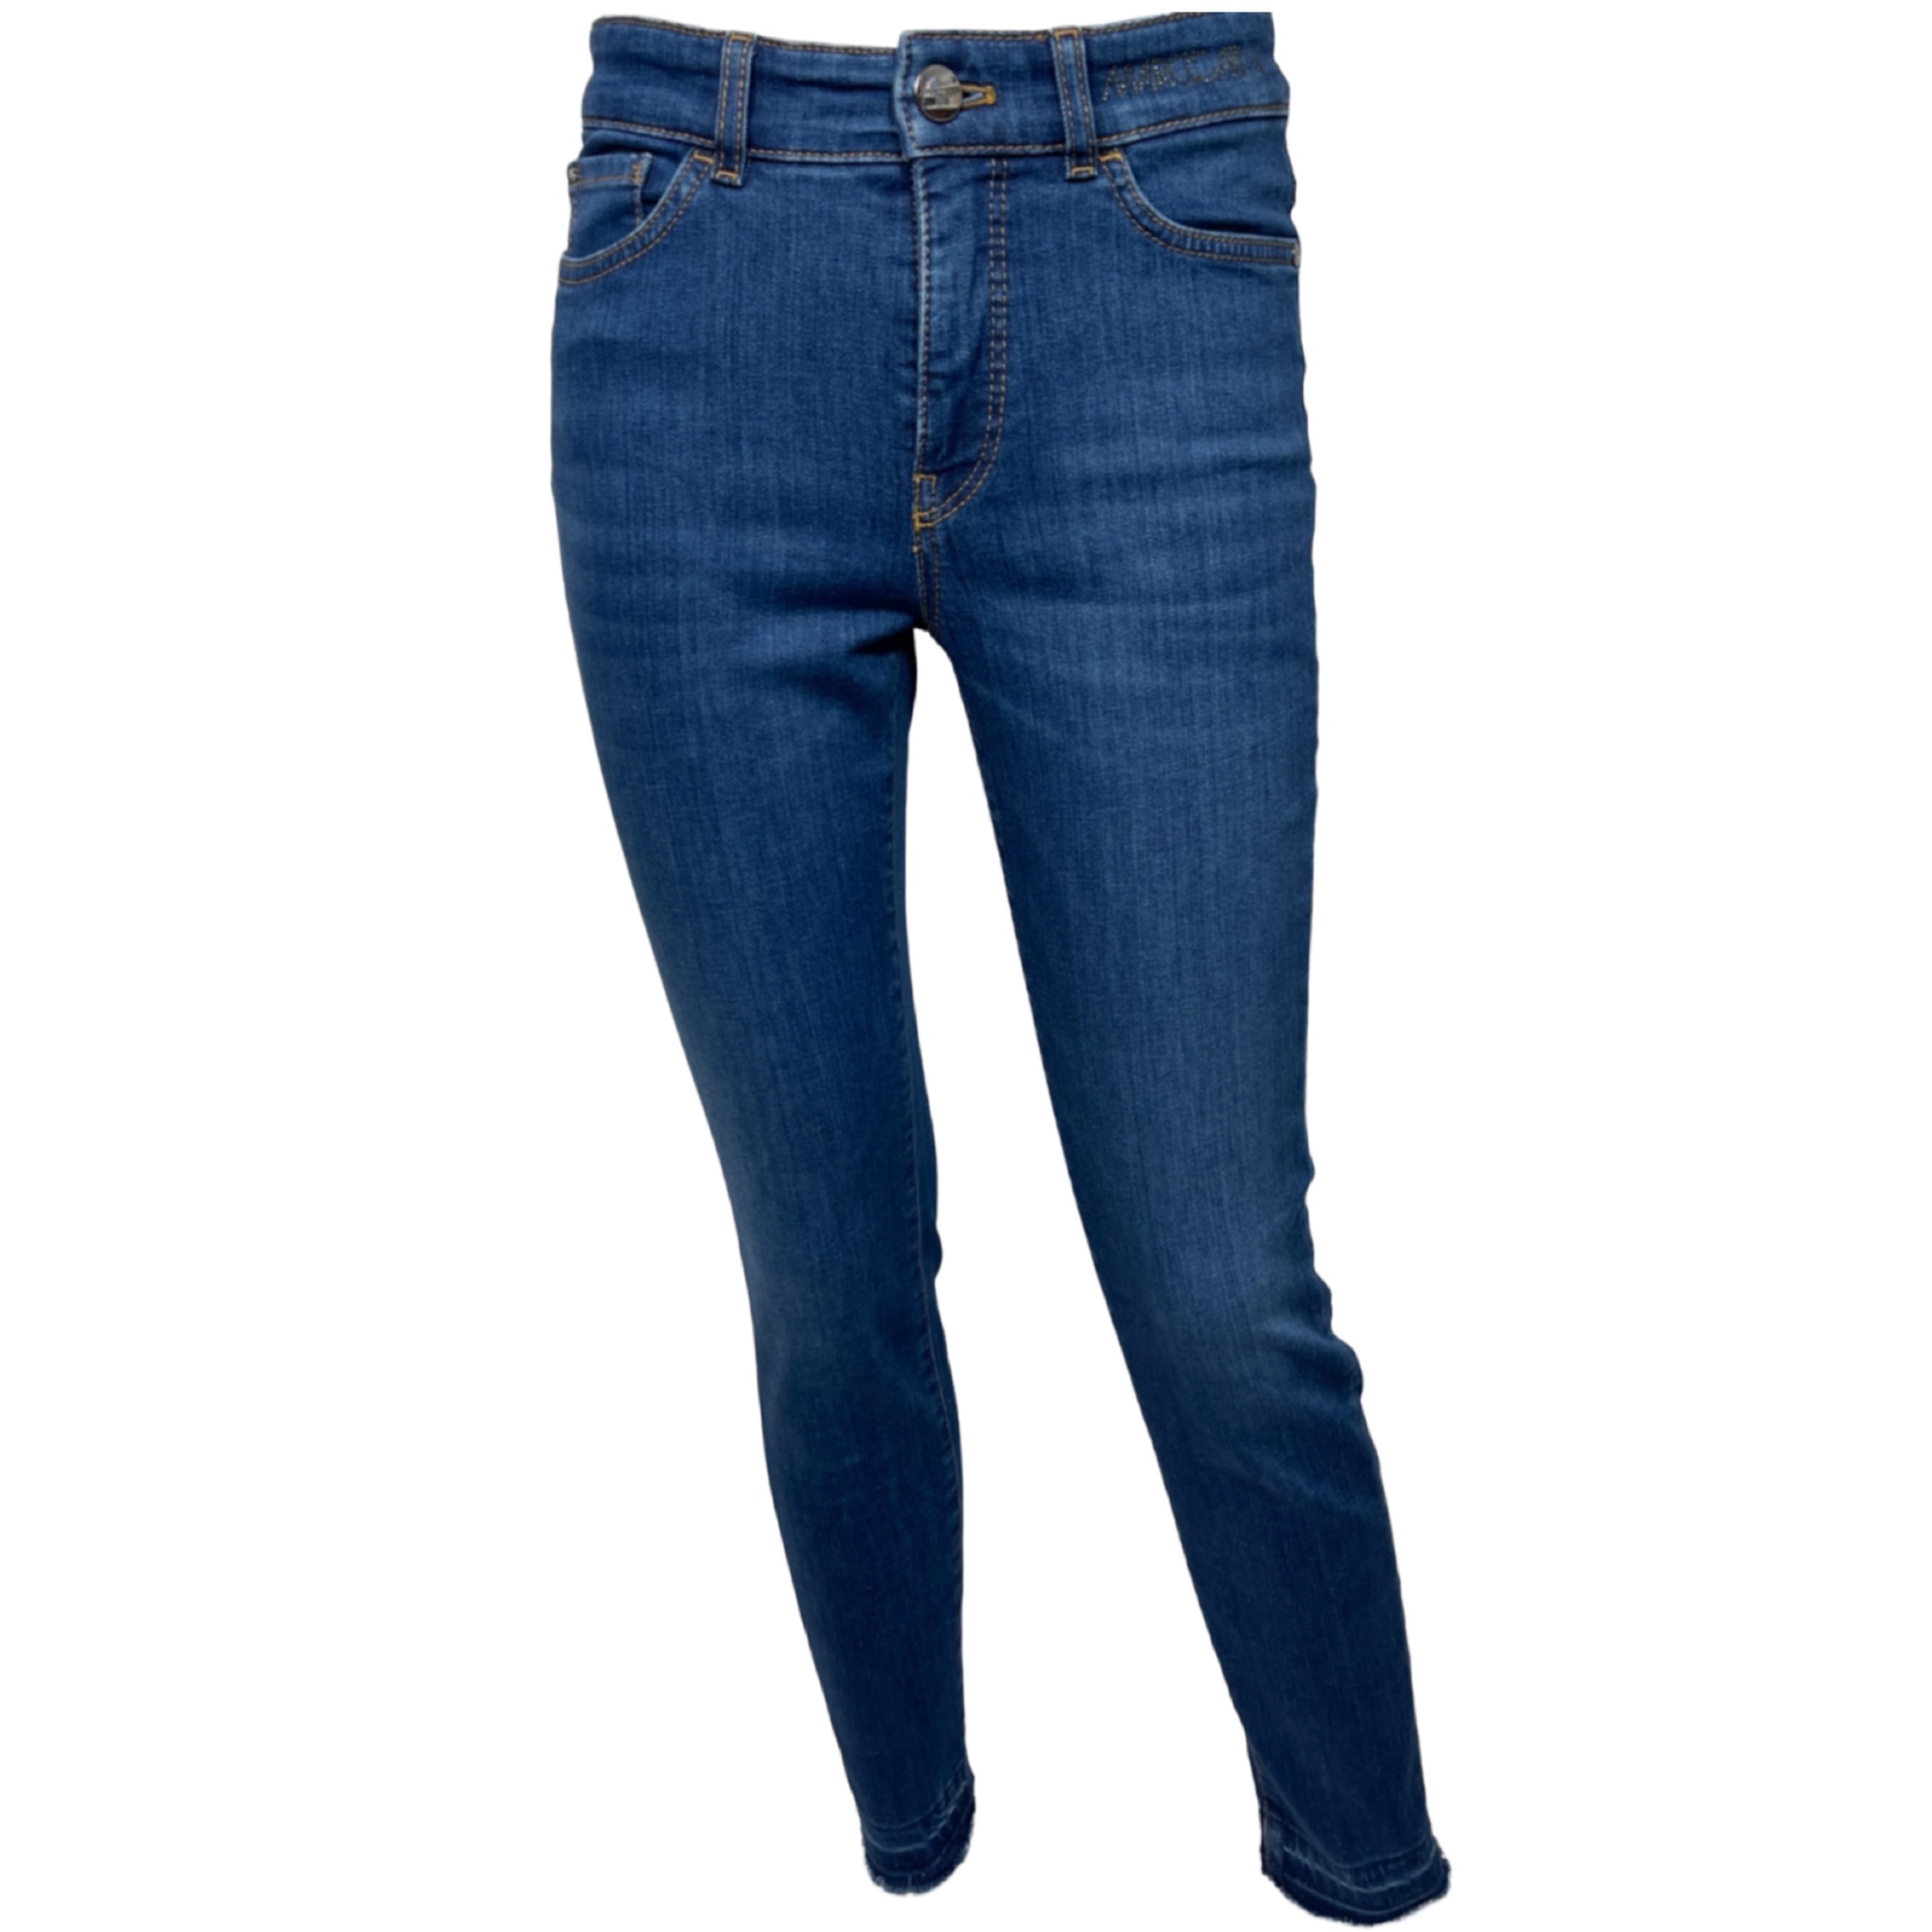 MARC CAIN UP 82.03 D71 Damen Jeans Rethink Together SILEA Slim Fit Blau 353